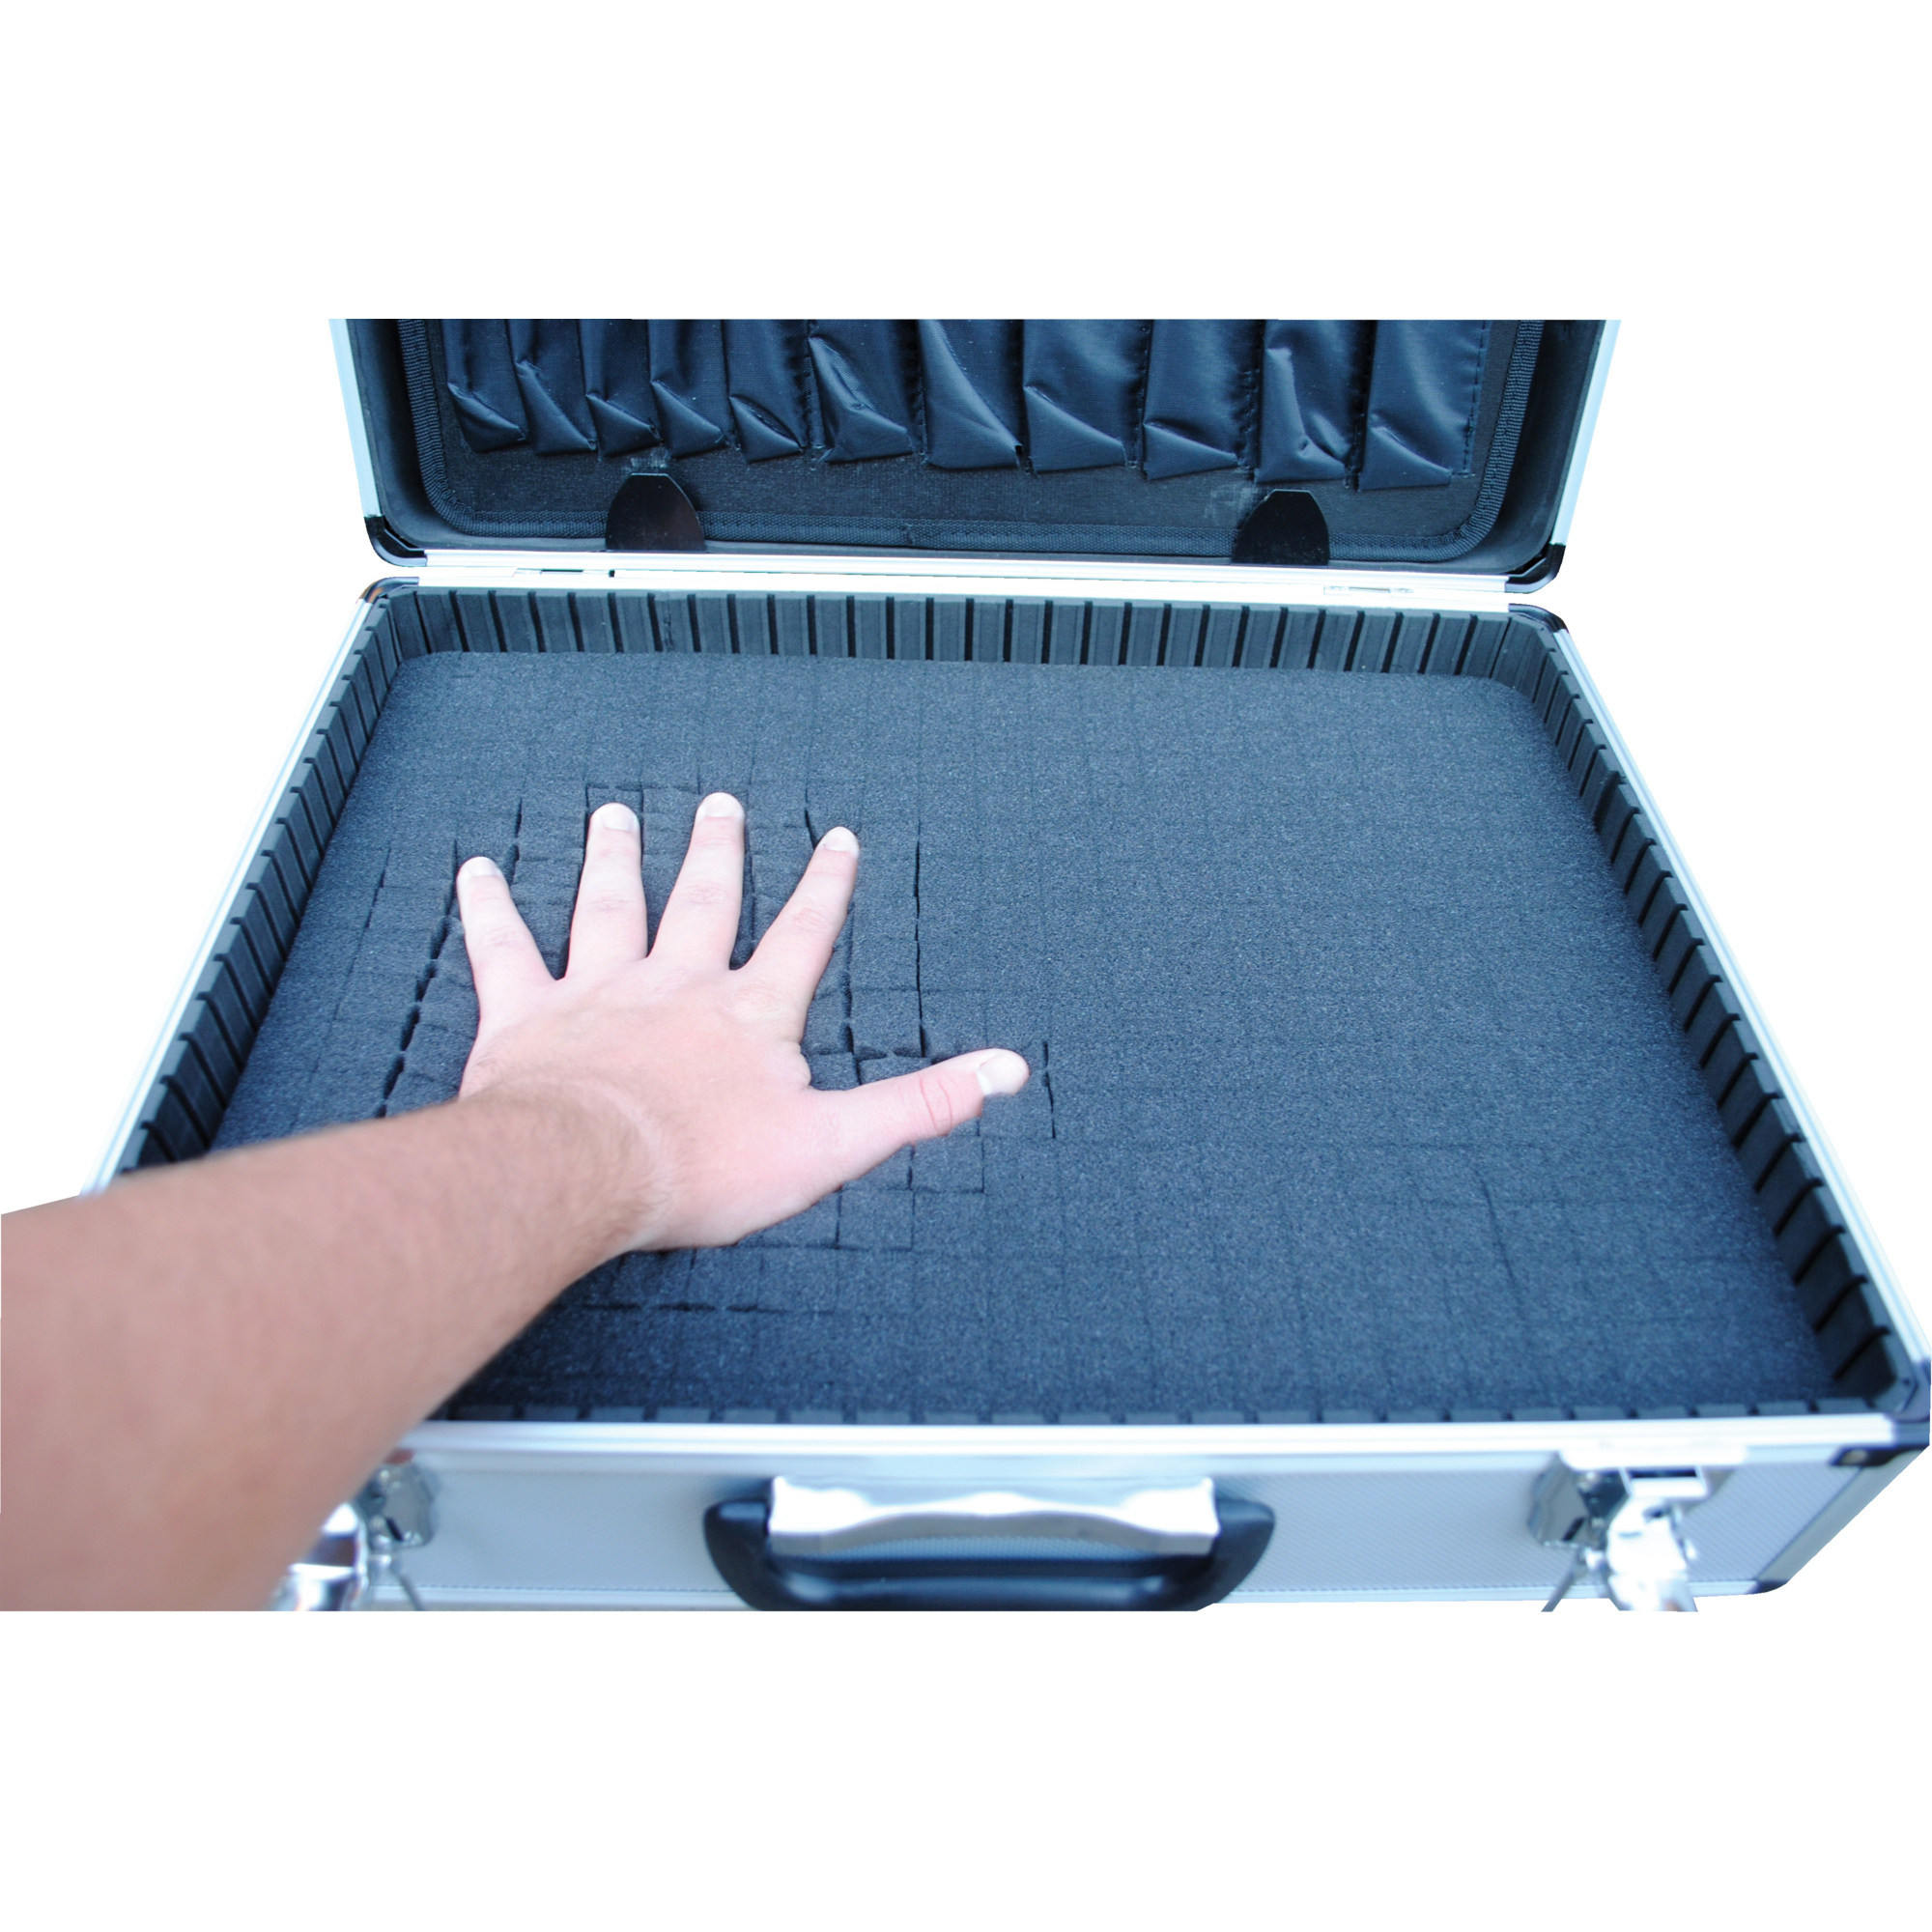 12 Bin Portable Plastic Organizer